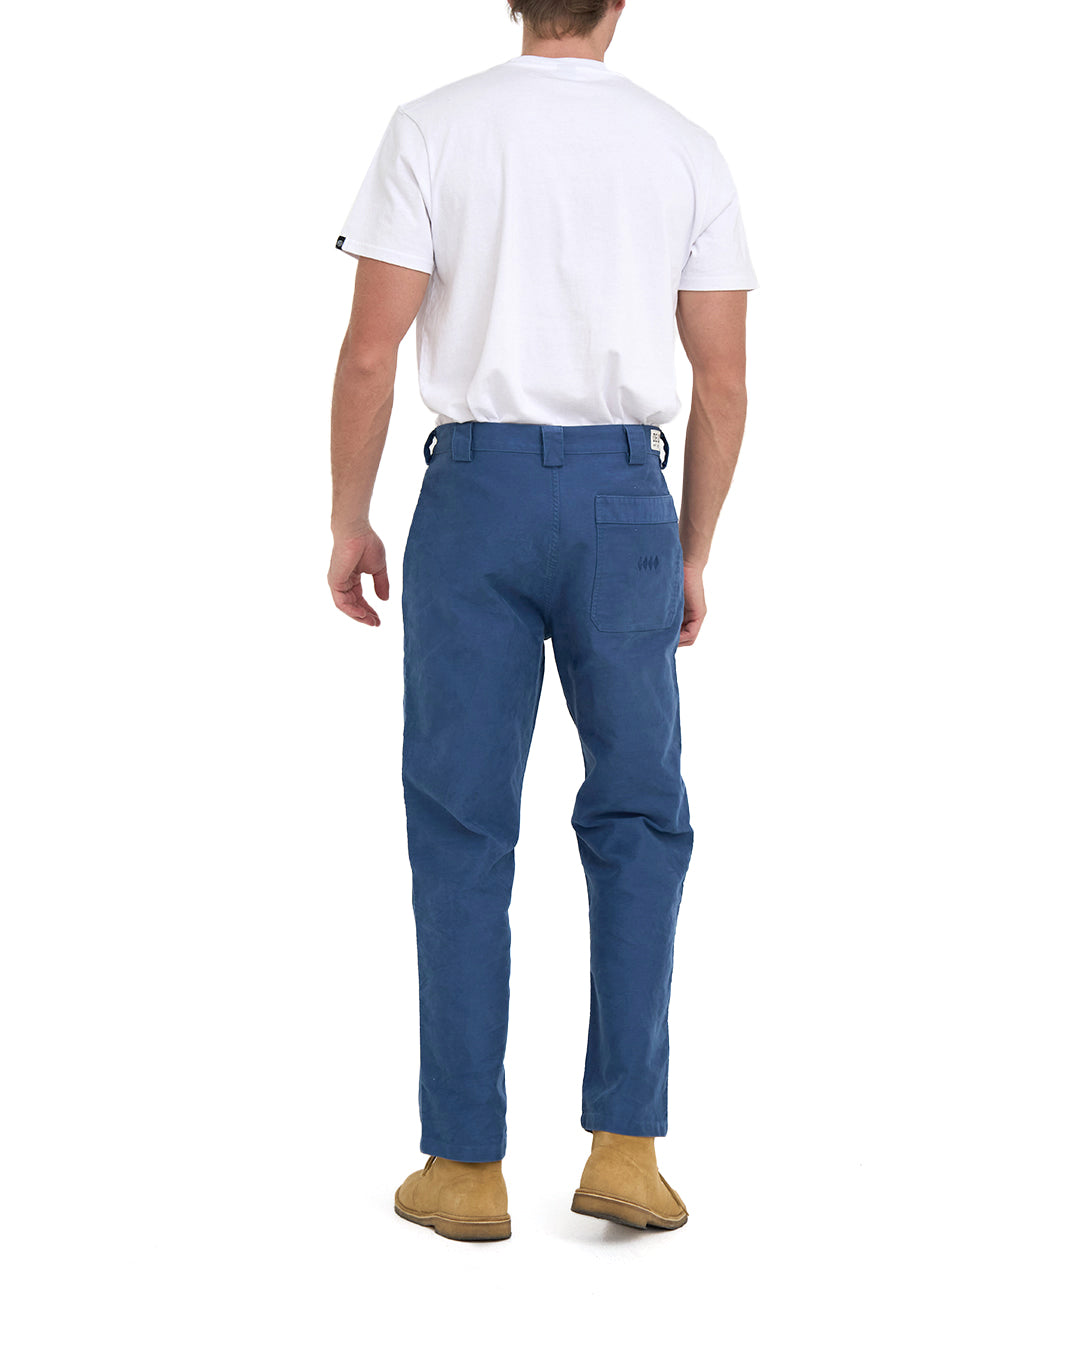 Lowes Lightweight Cargo Trousers - Lowes Menswear